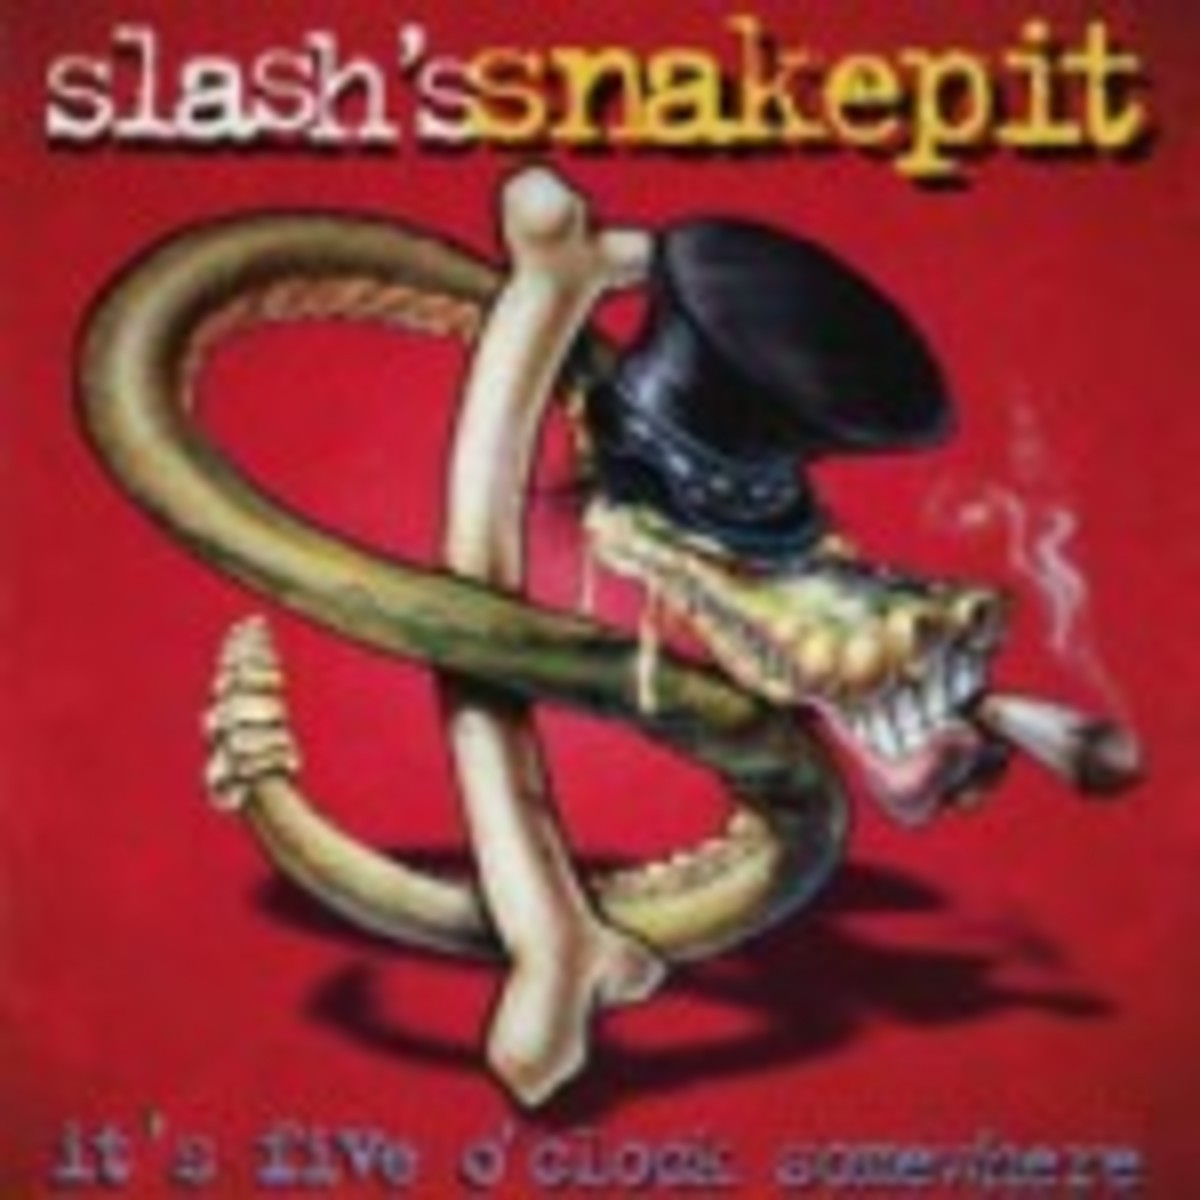 Slash's Snakepit It's Five O'Clock Somewhere